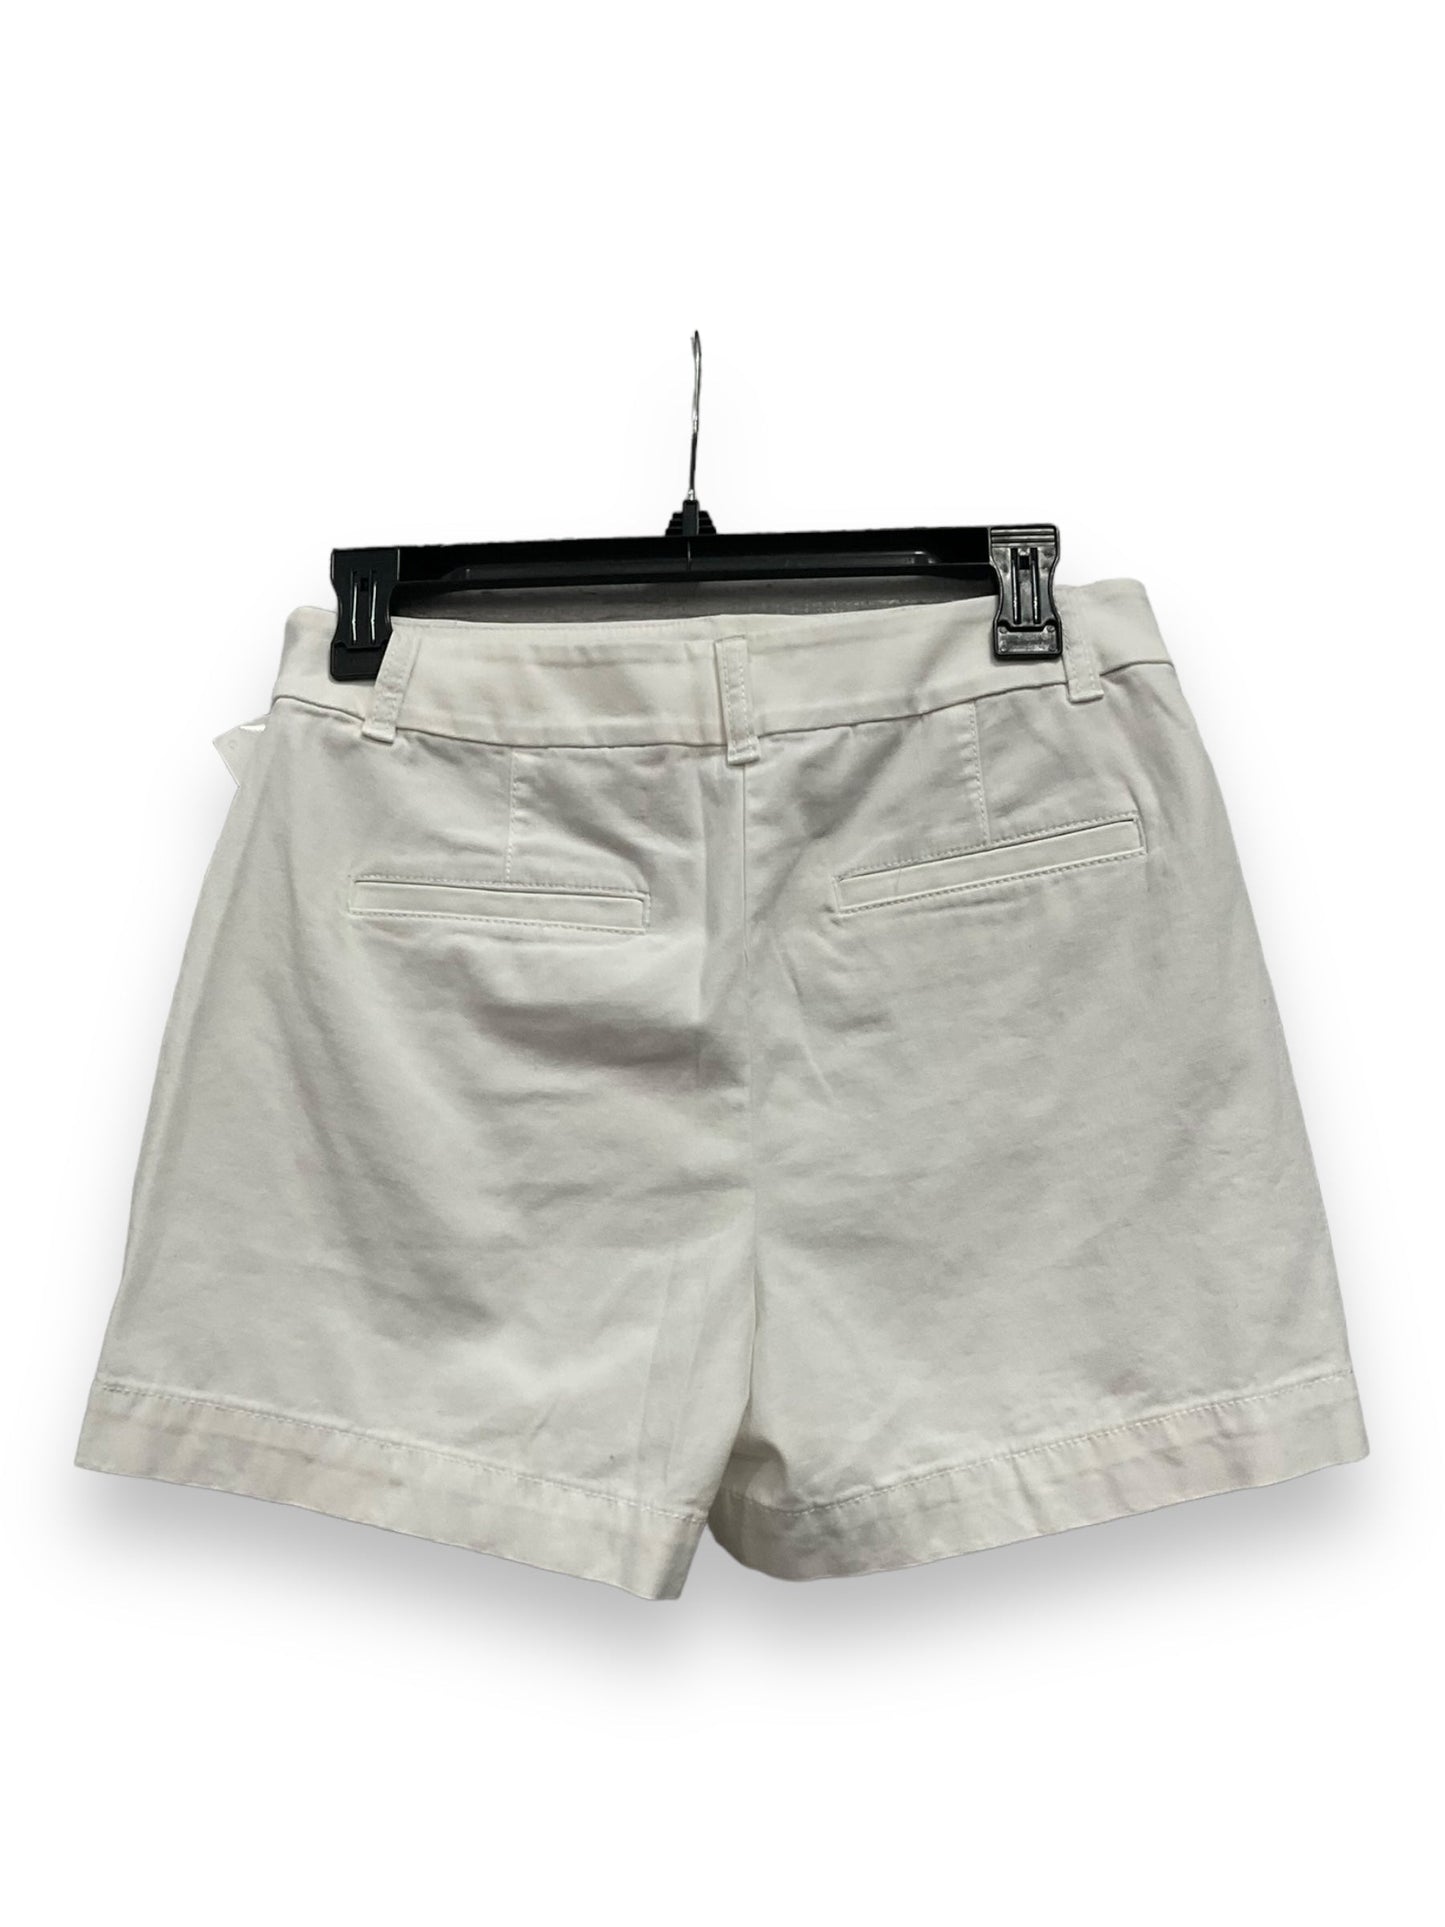 White Shorts Loft, Size 2